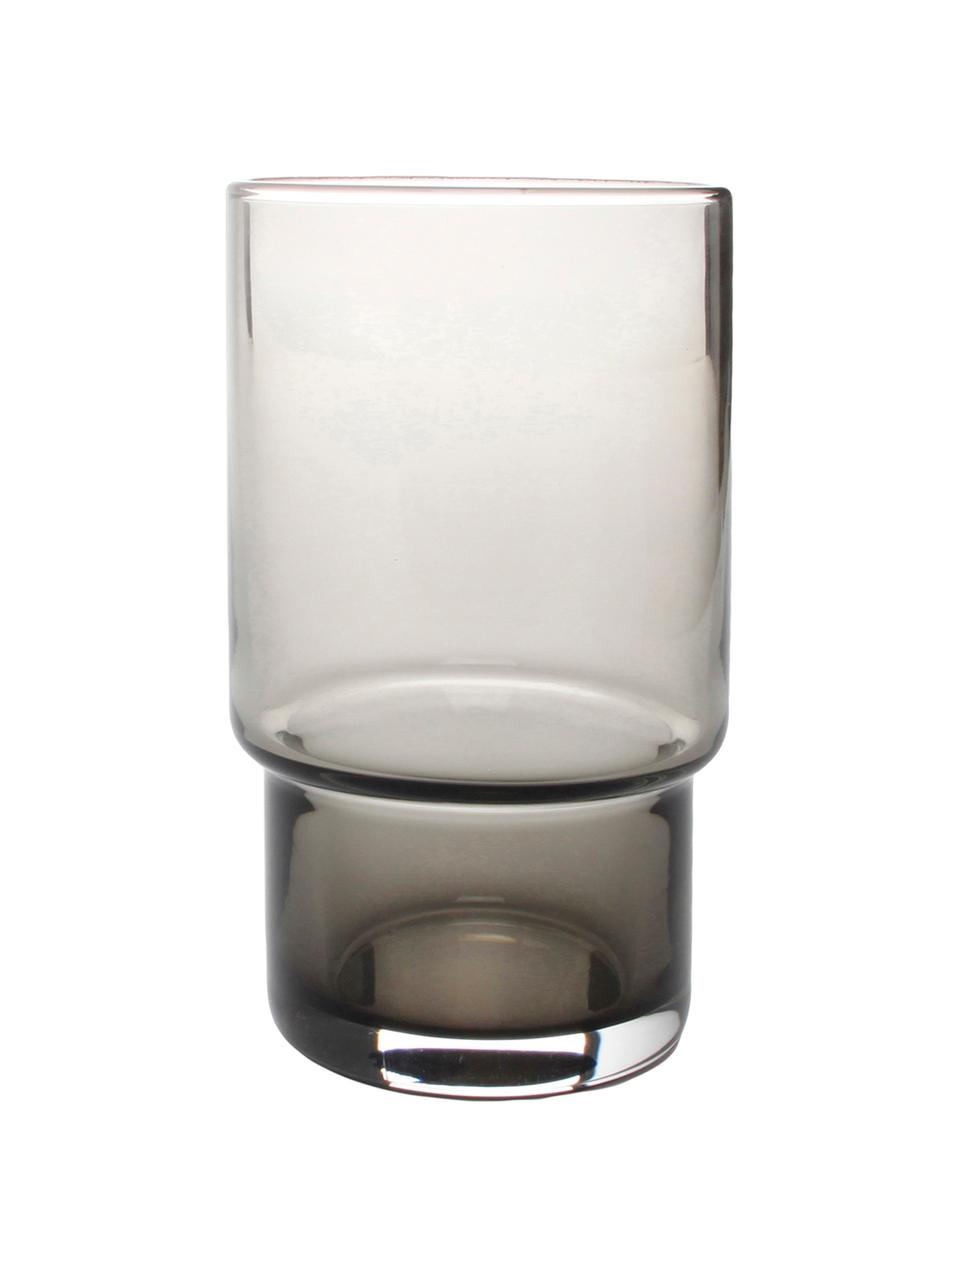 Waterglazen Secrets in grijs, 4 stuks, Glas, Grijs, transparant, Ø 7 x H 12 cm